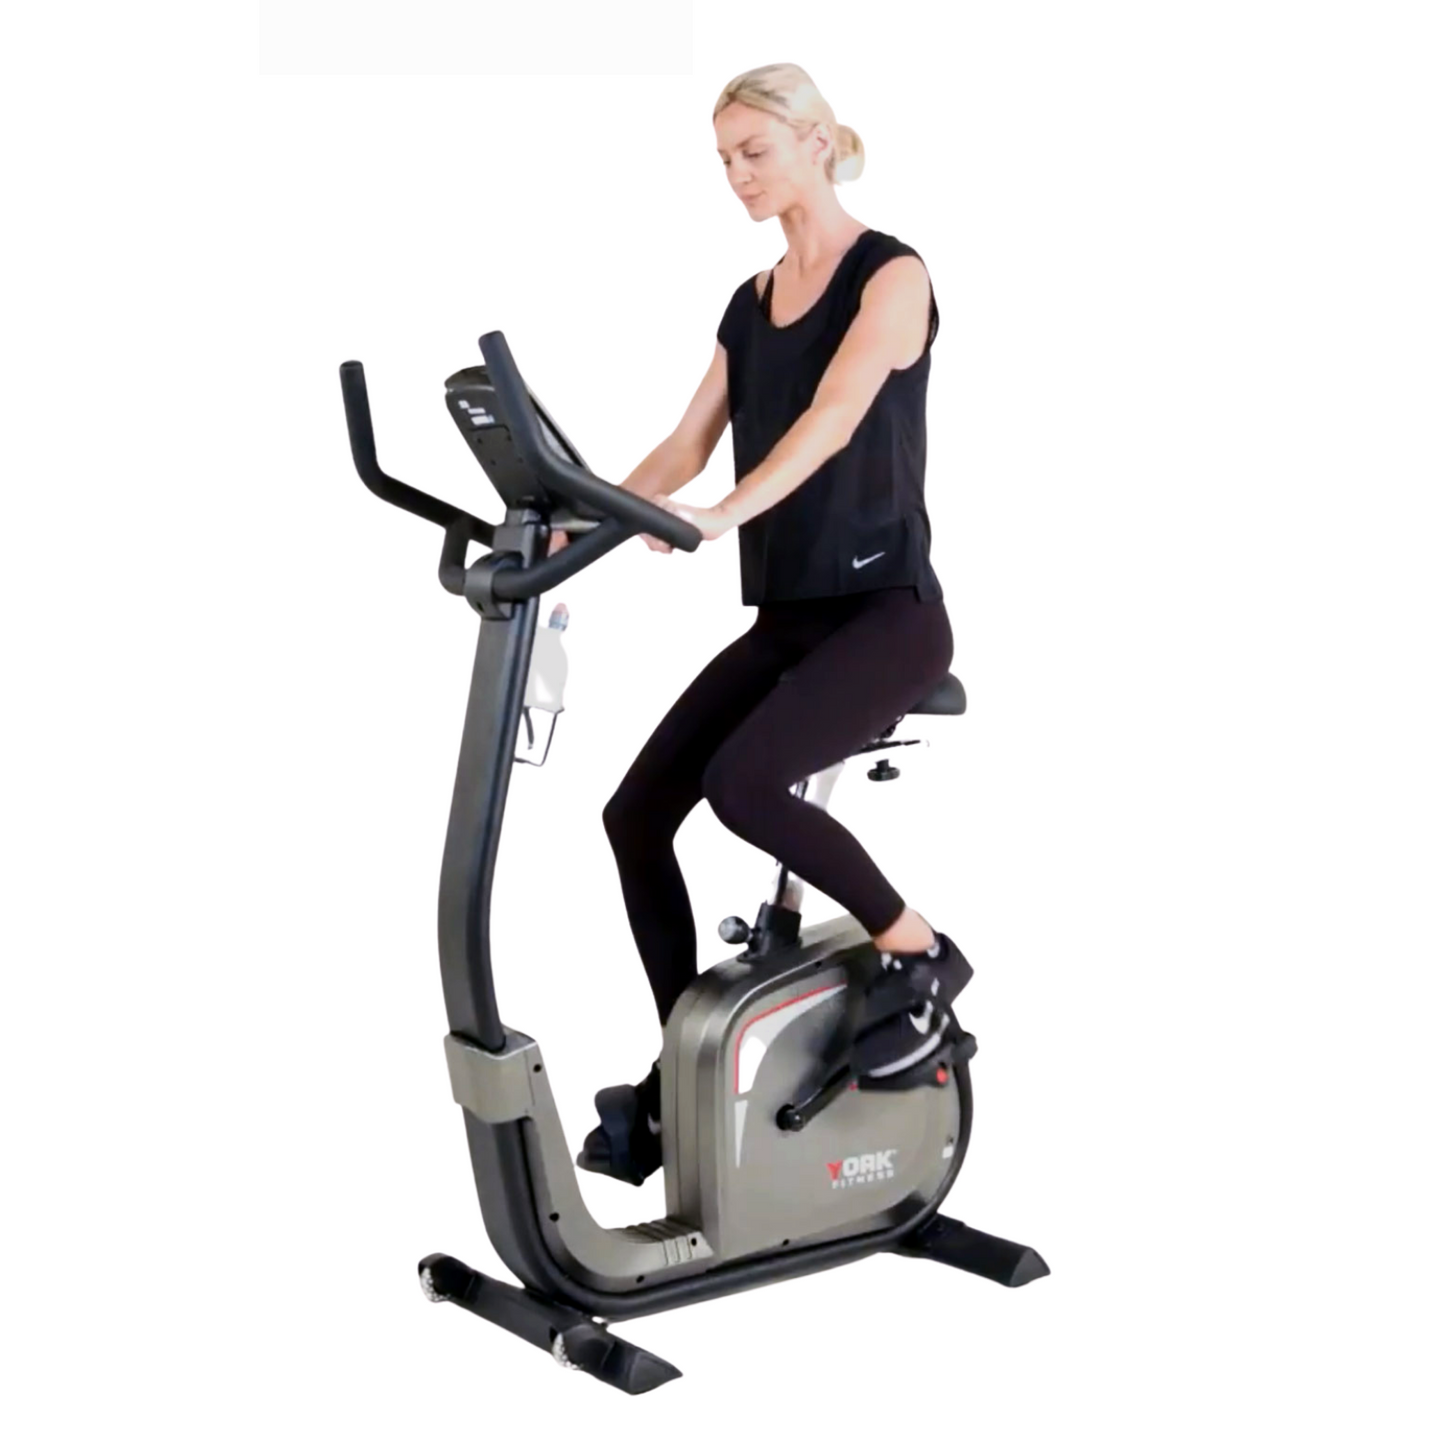 York Fitness LC-UB Upright Bike-Gym Direct